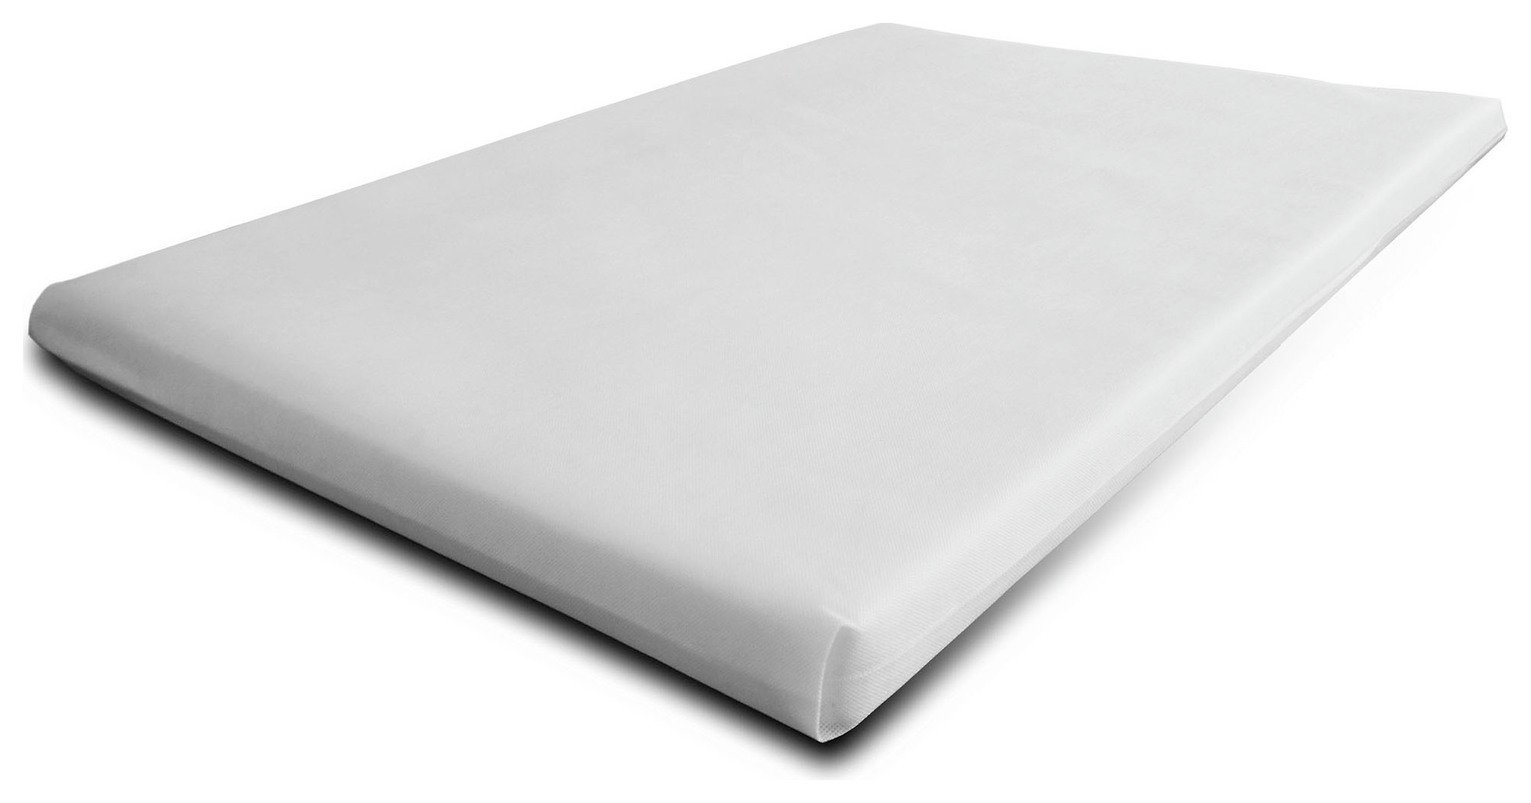 Cuggl 140 x 70cm Foam Cot Bed Mattress Review